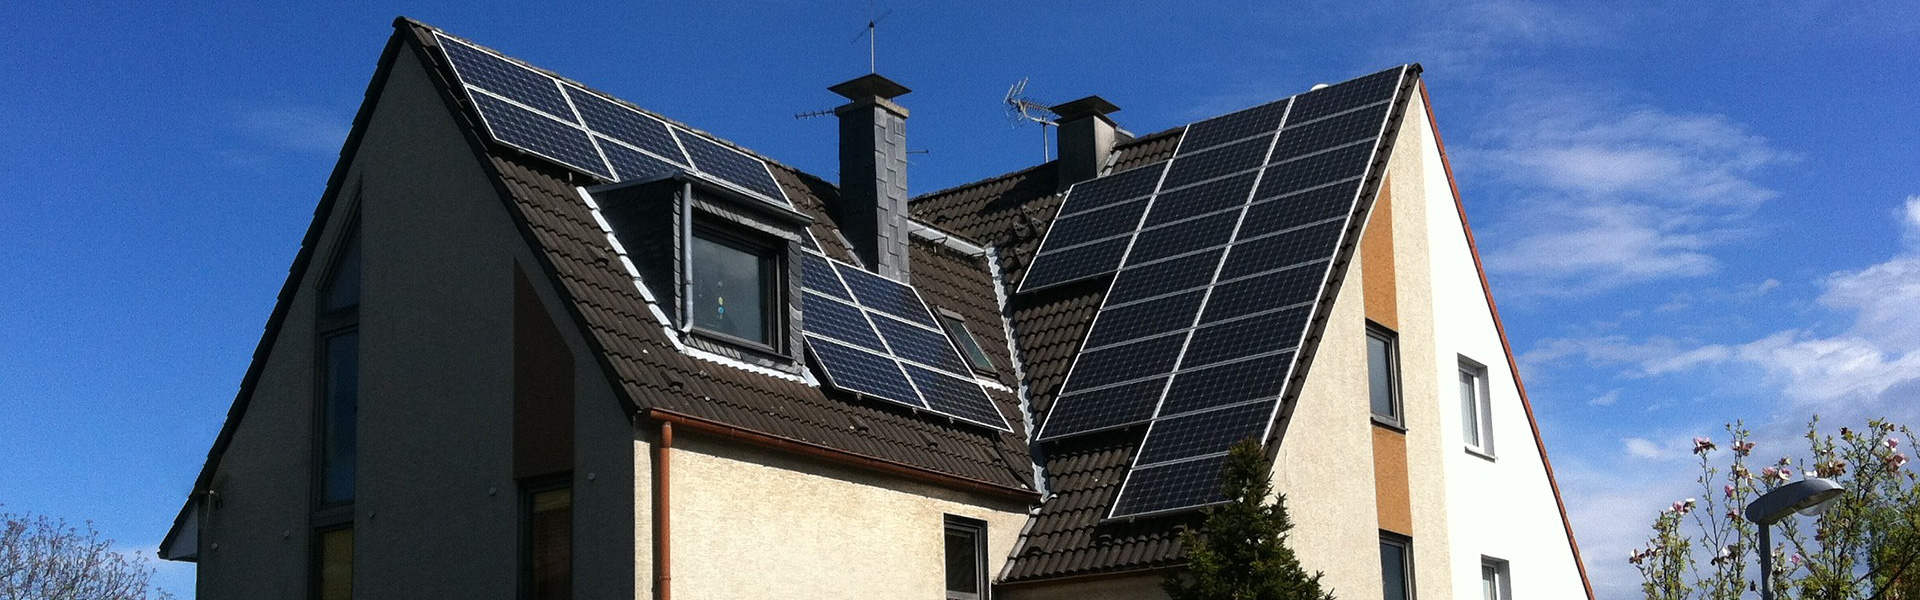 Erneuerbare Energien Solaranlage